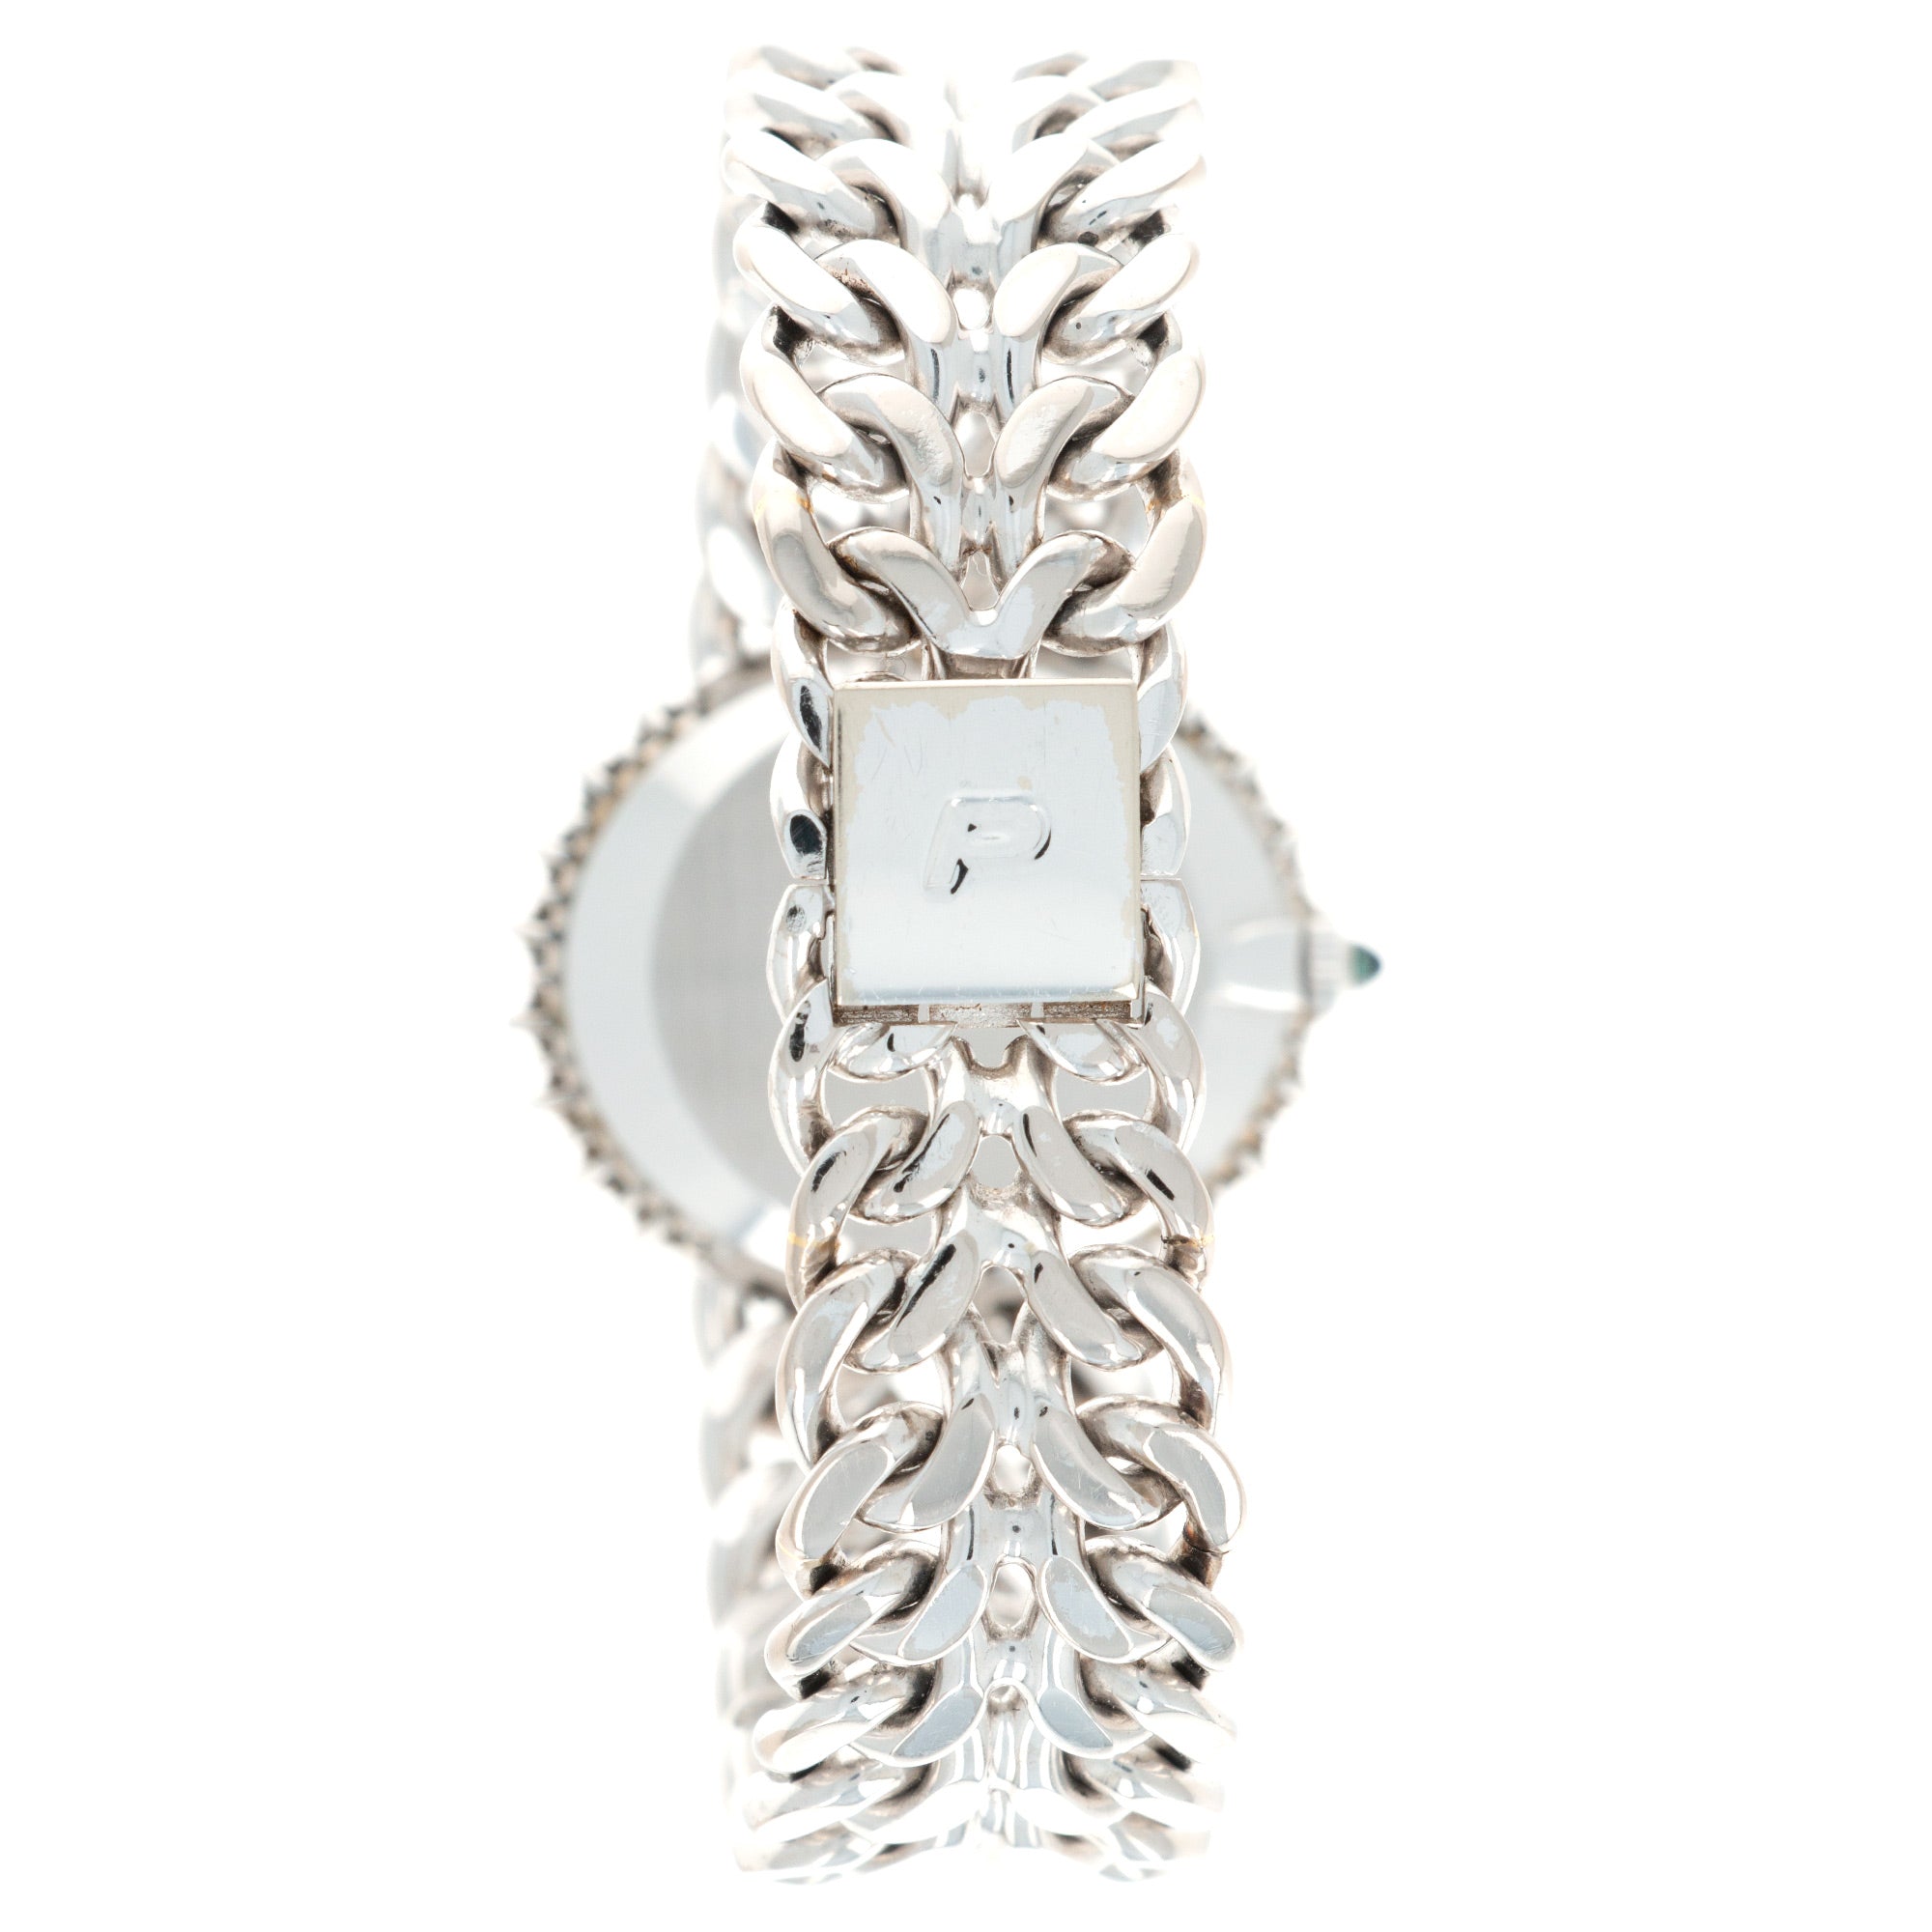 Piaget - Piaget White Gold Diamond Watch, 1970s - The Keystone Watches